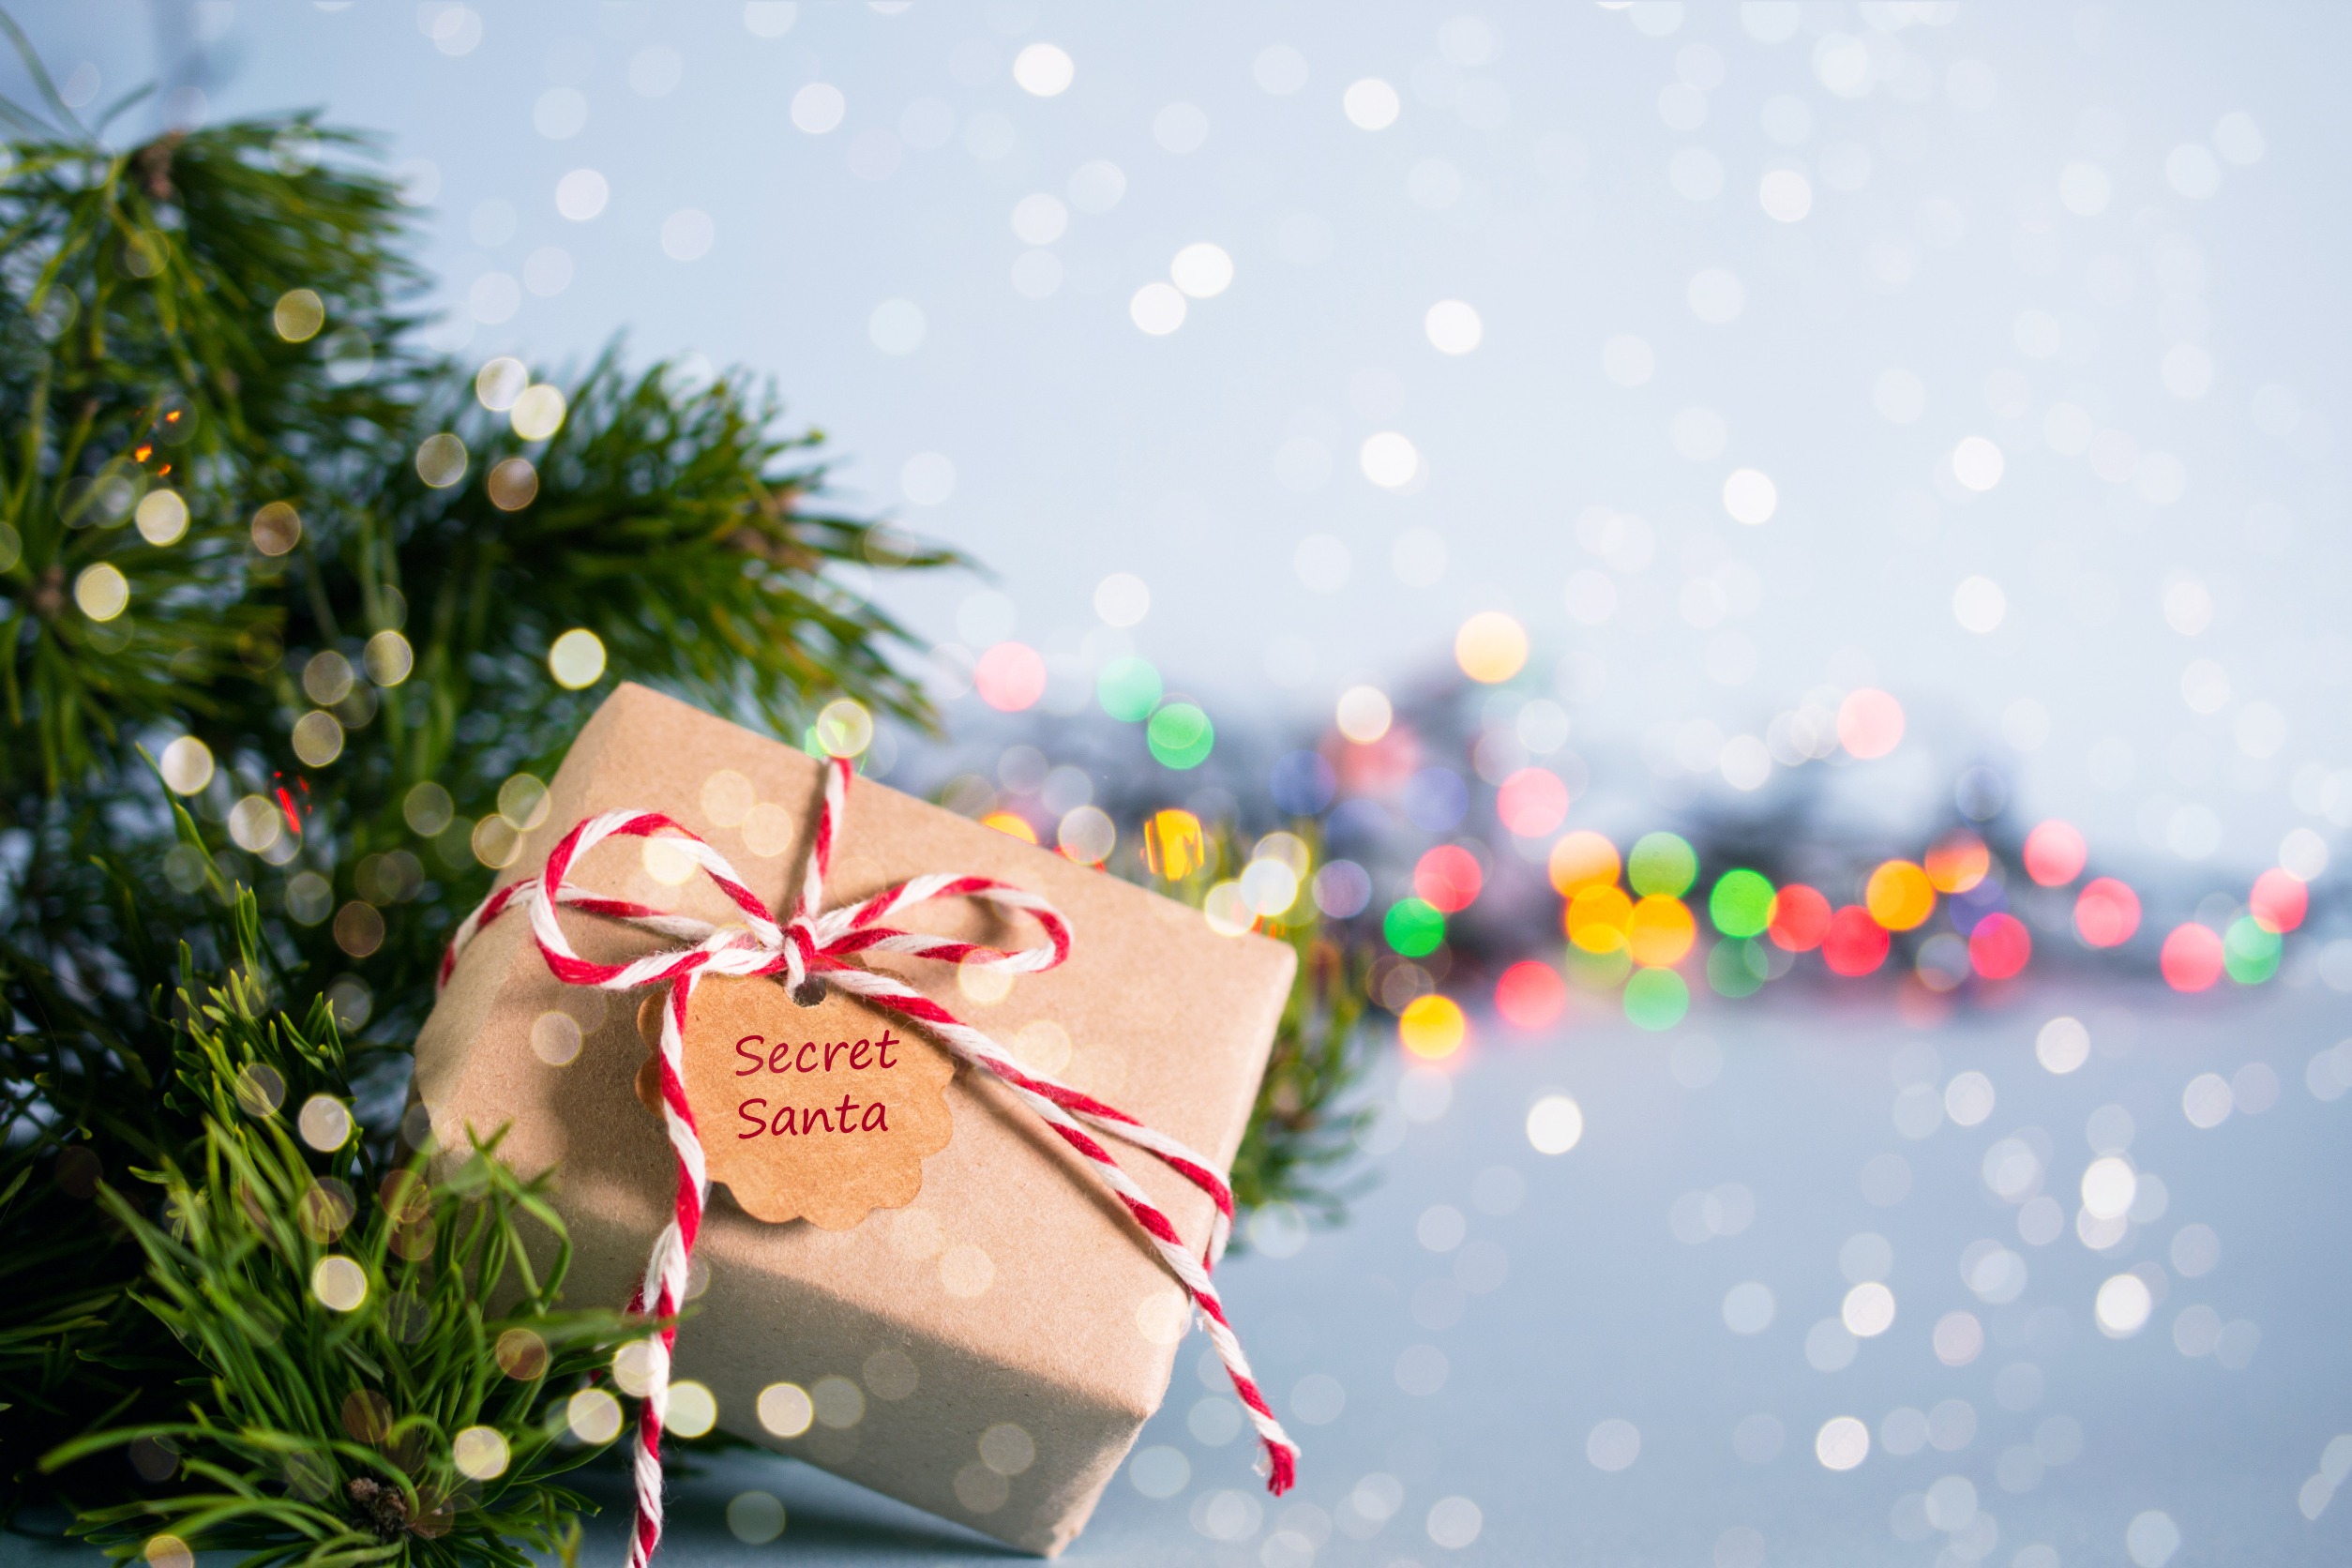 Secret Santa gift and Christmas lights and trees